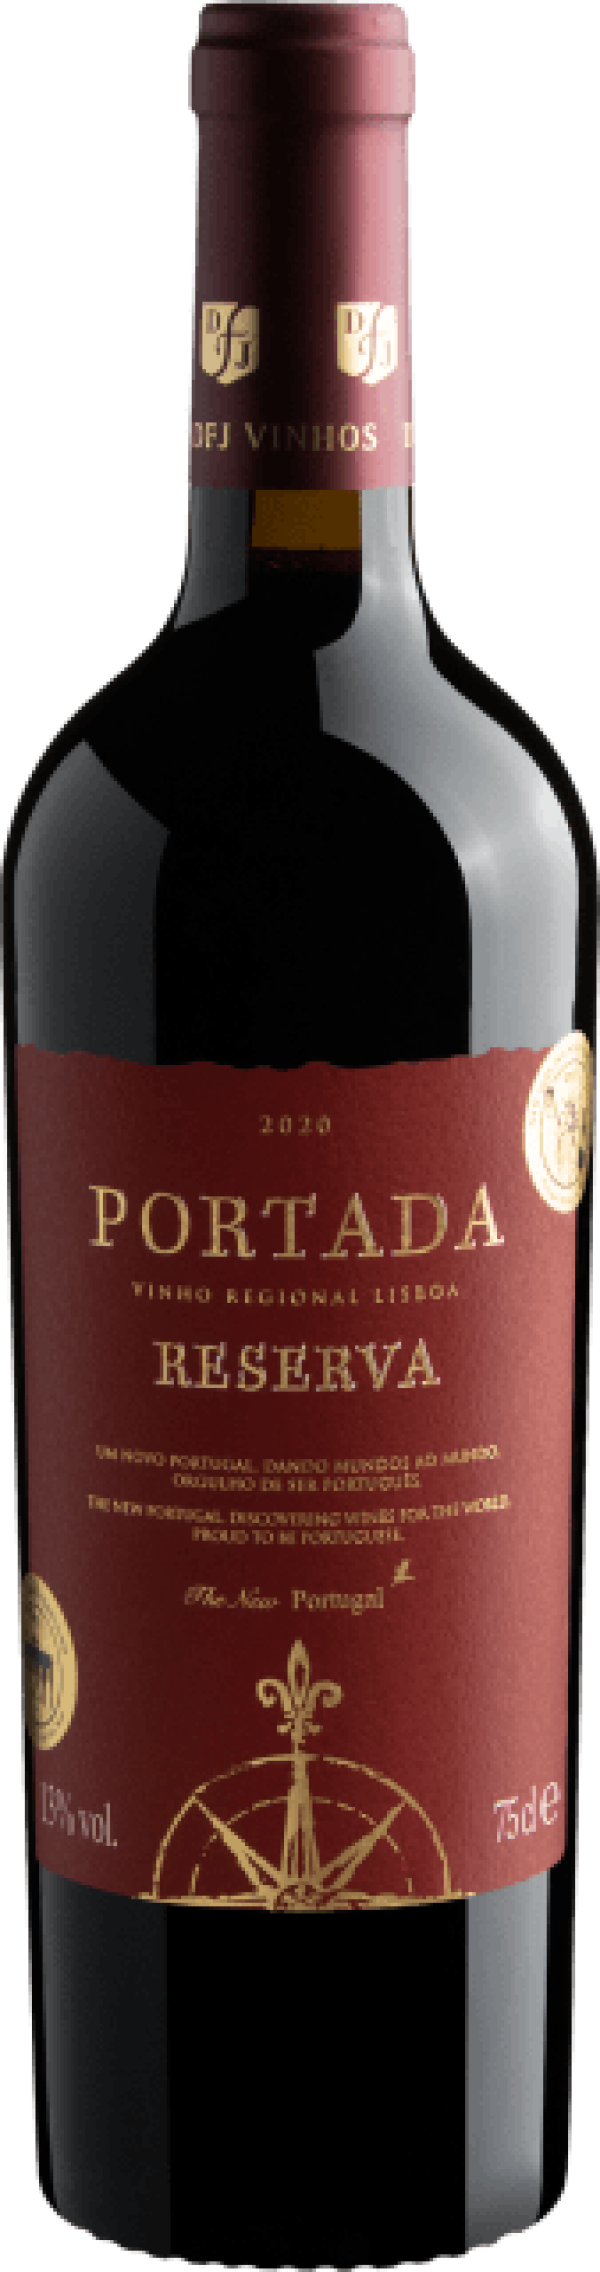 Portada Reserva Vinho Regional Lisboa 2020